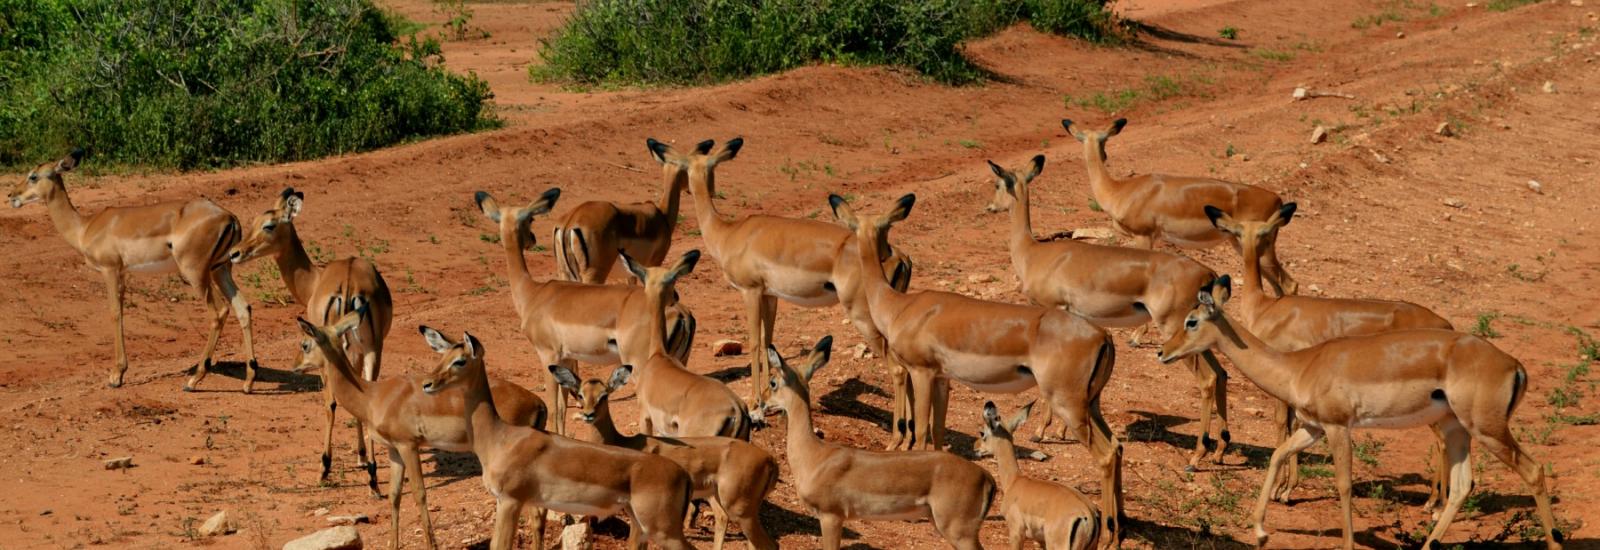 A photo of a group of antelopes walking on a savannah